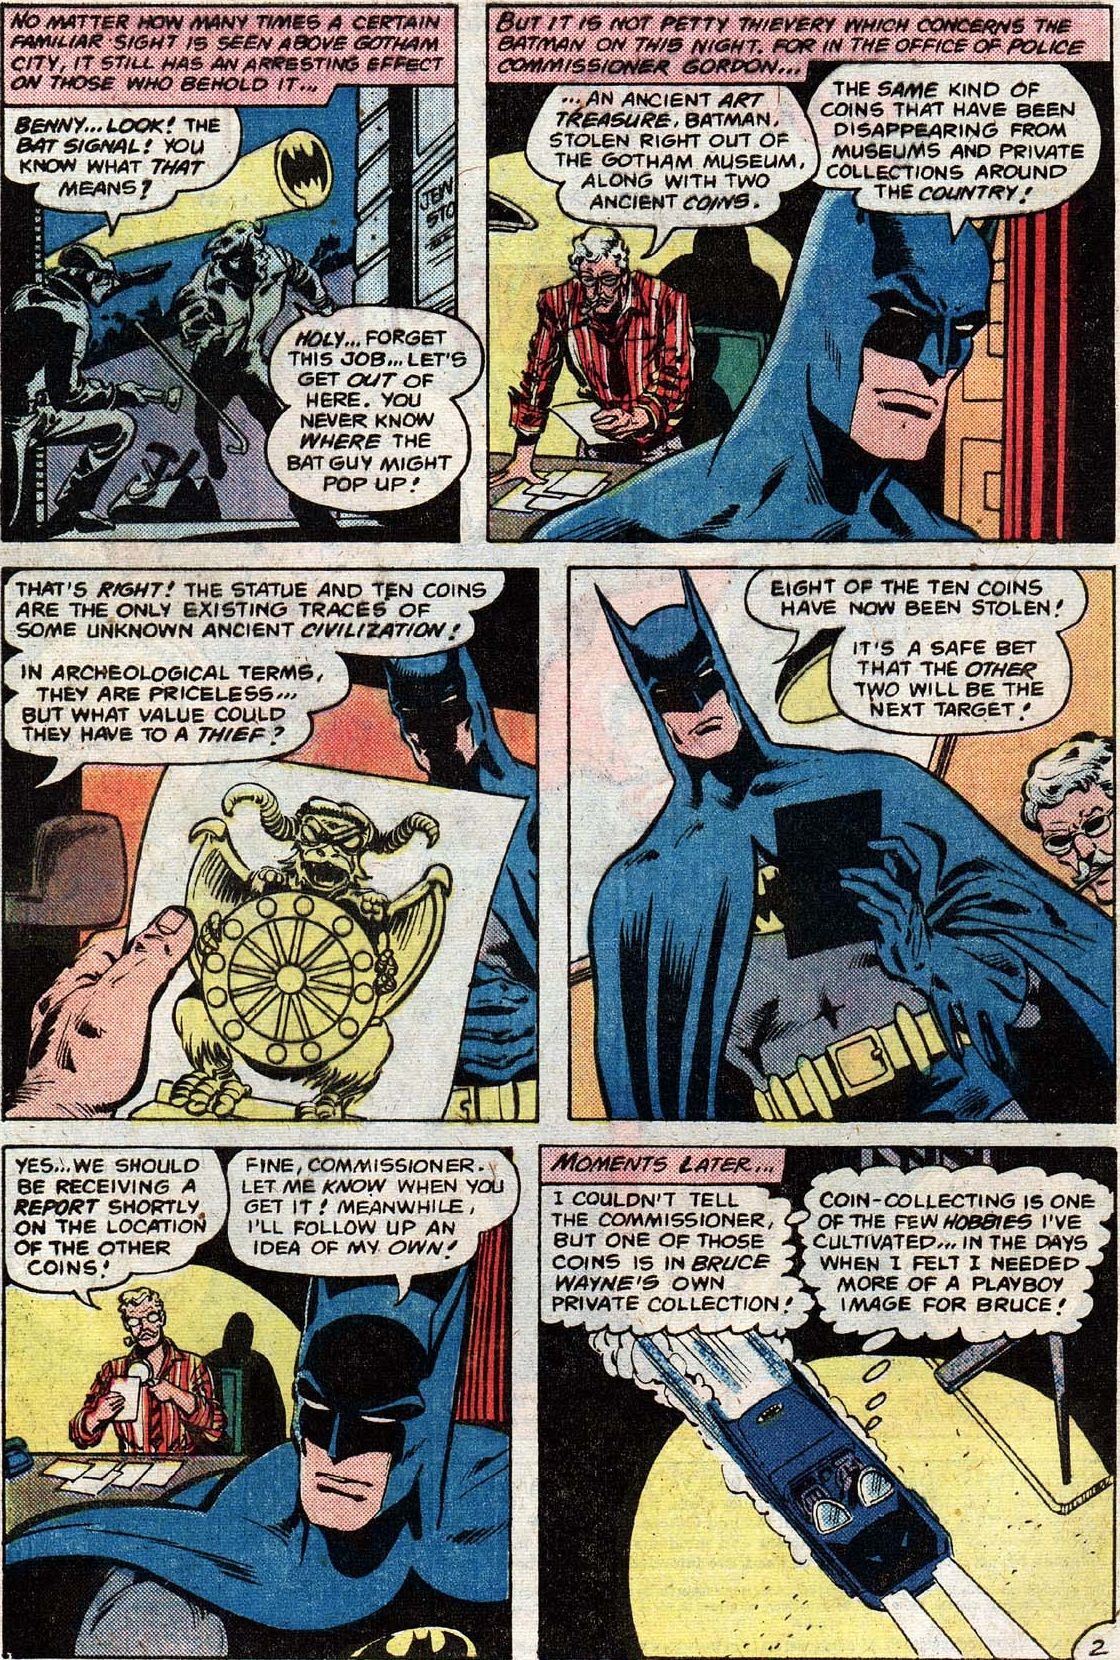 Batman collects coins!